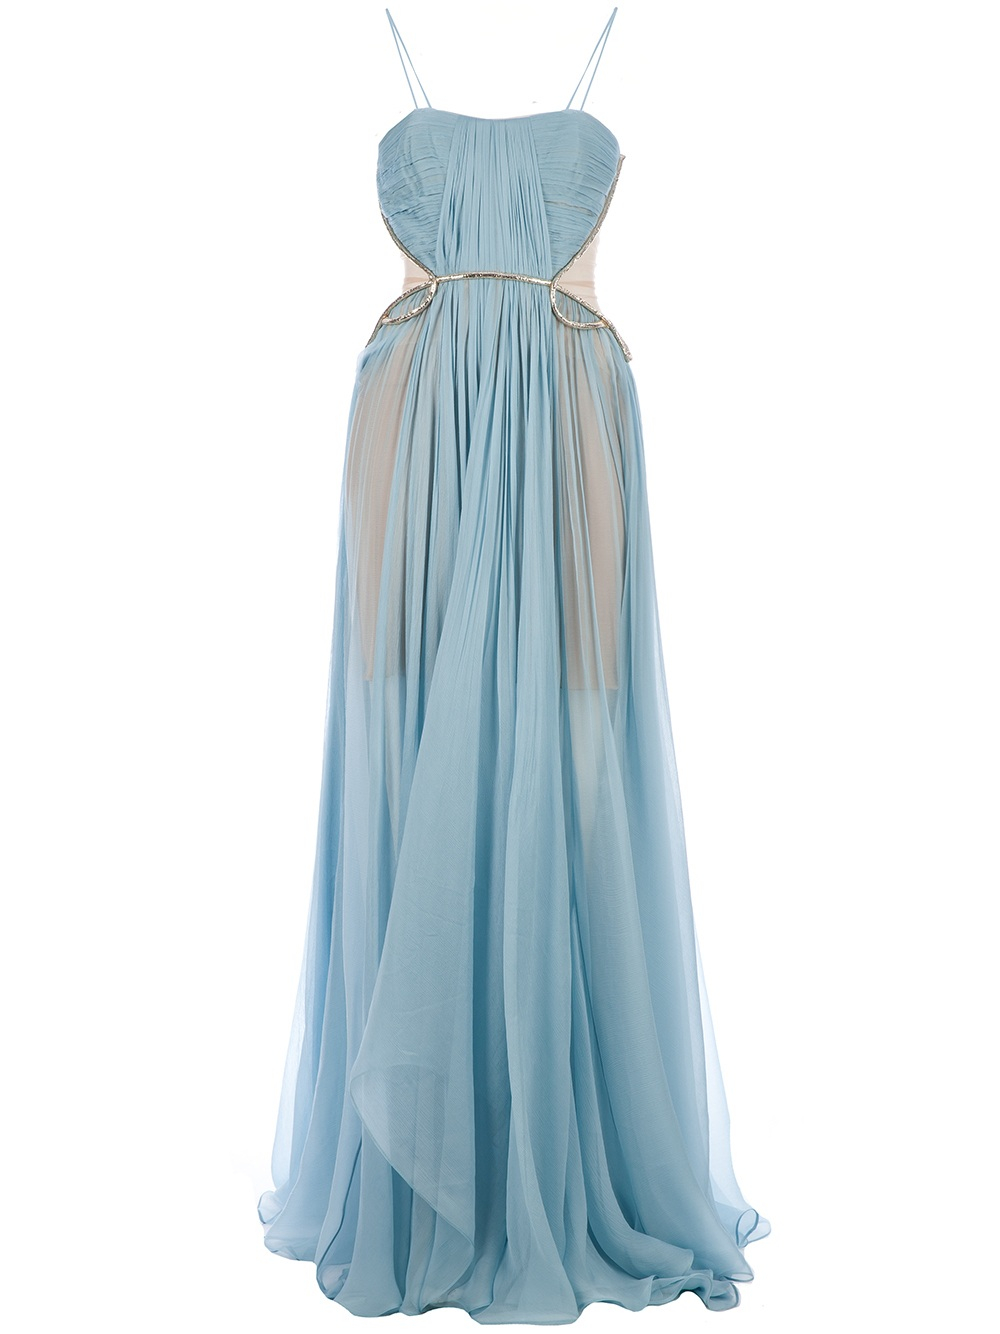 Lyst - Maria Lucia Hohan 'Imogen' Dress in Blue